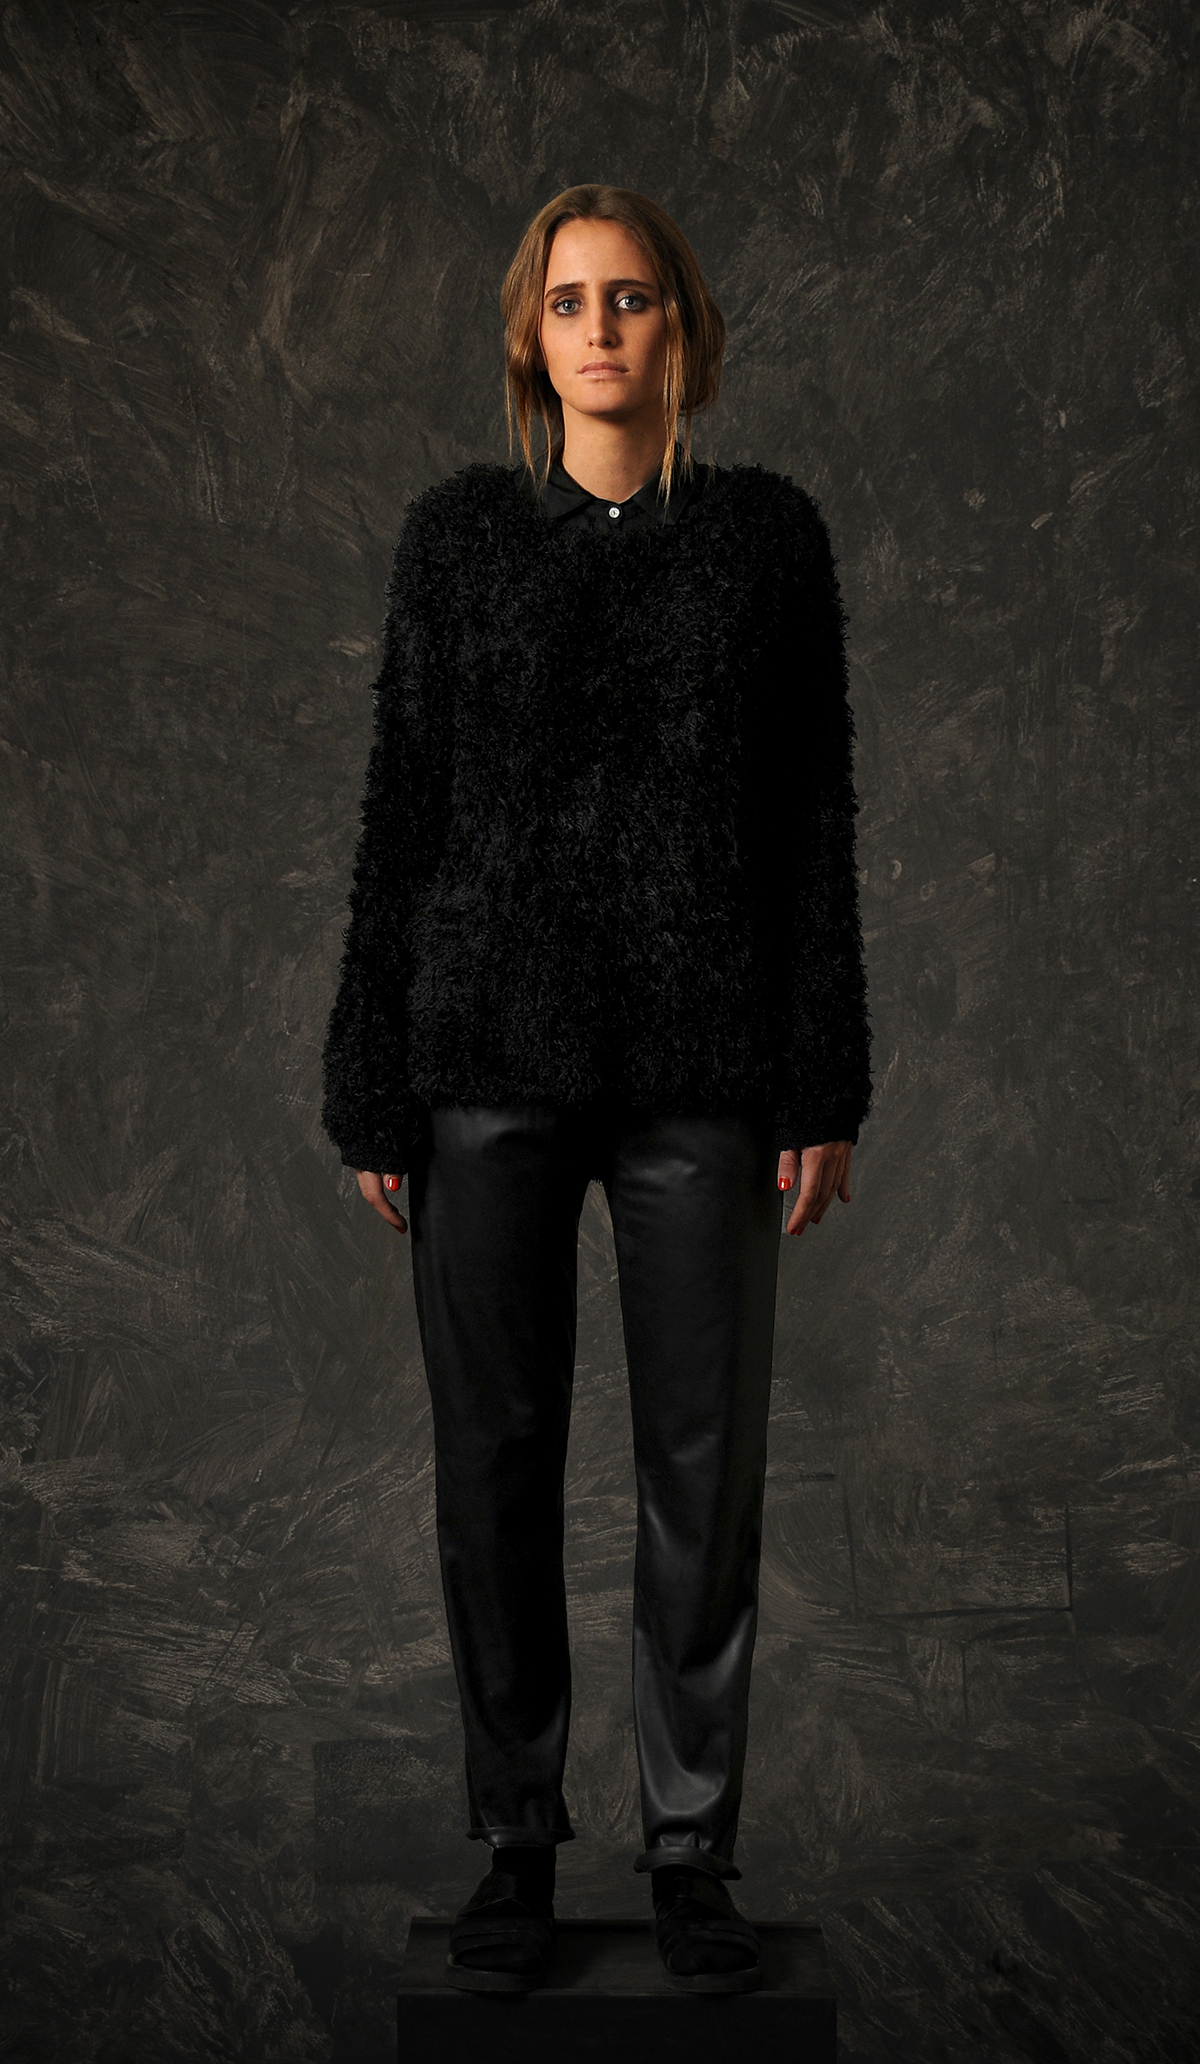 Clothing design brand new Style photo digital leather cotton wool velvet her mendoza argentina diseño